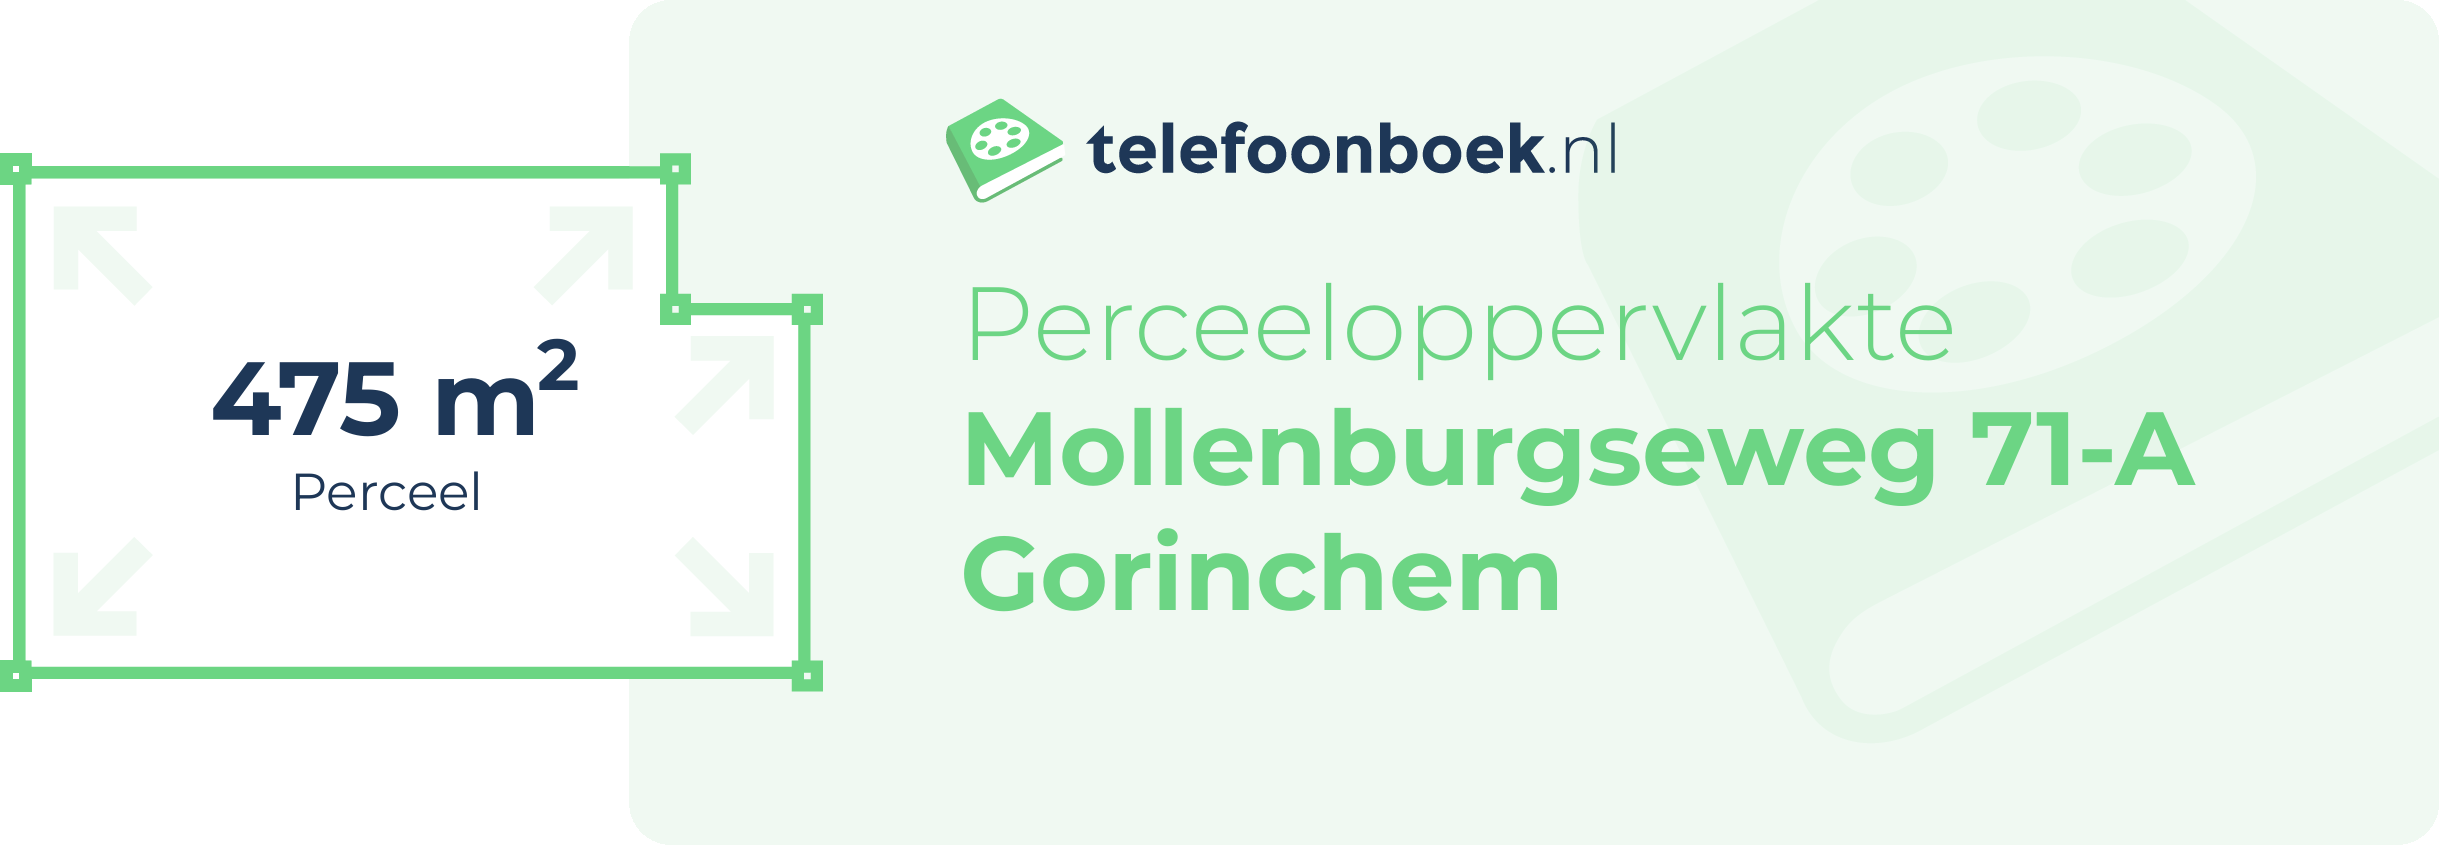 Perceeloppervlakte Mollenburgseweg 71-A Gorinchem